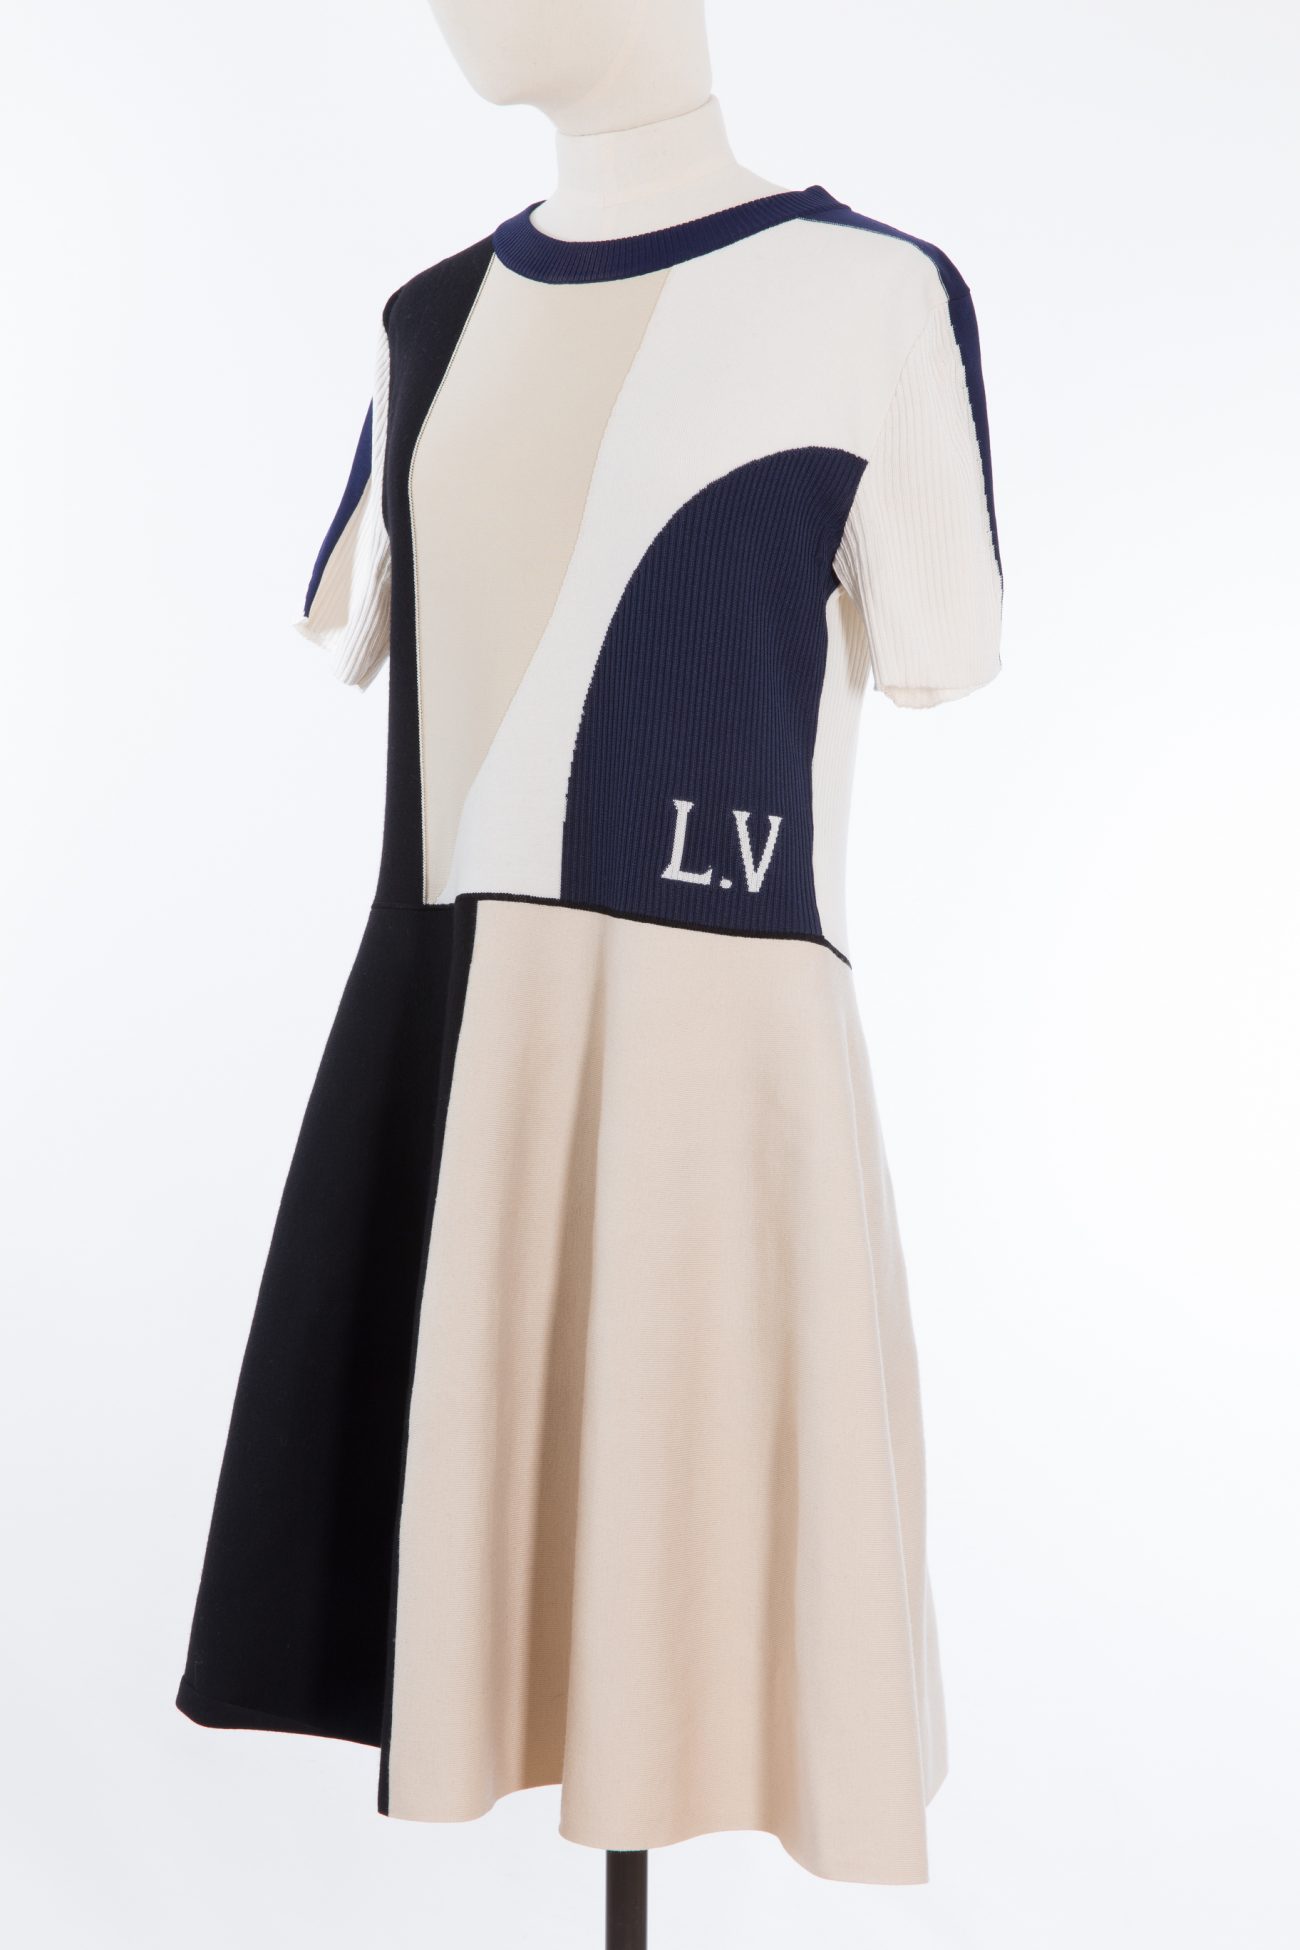 Louis Vuitton knit dress